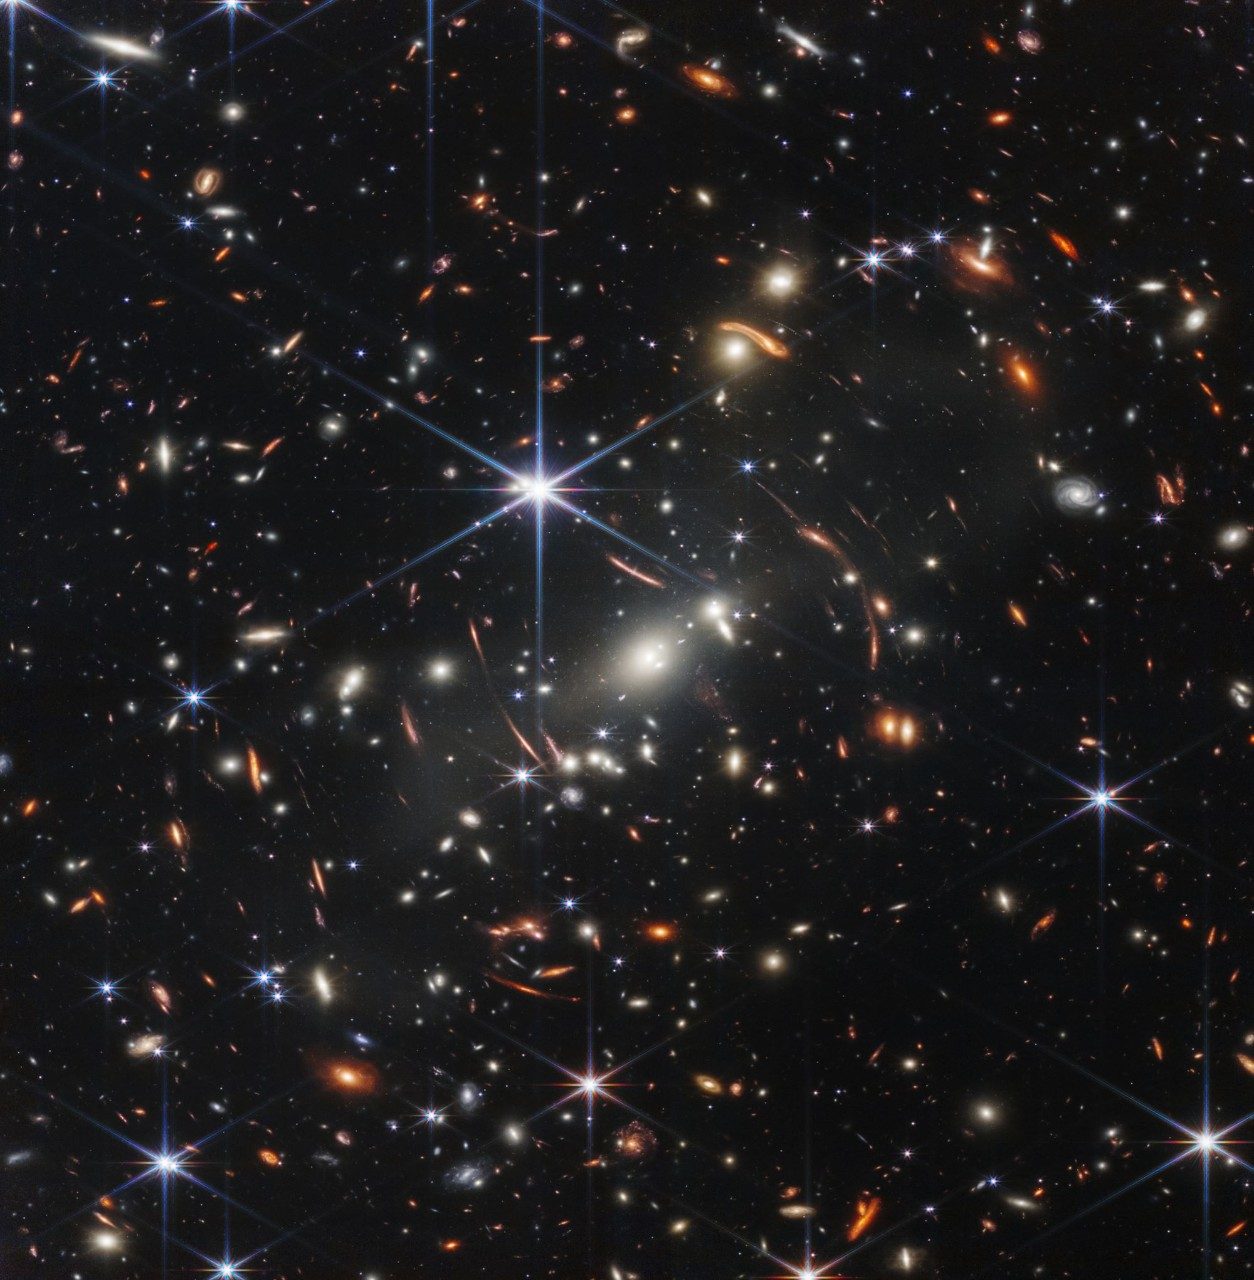 SMACS 0723 galaxy cluster